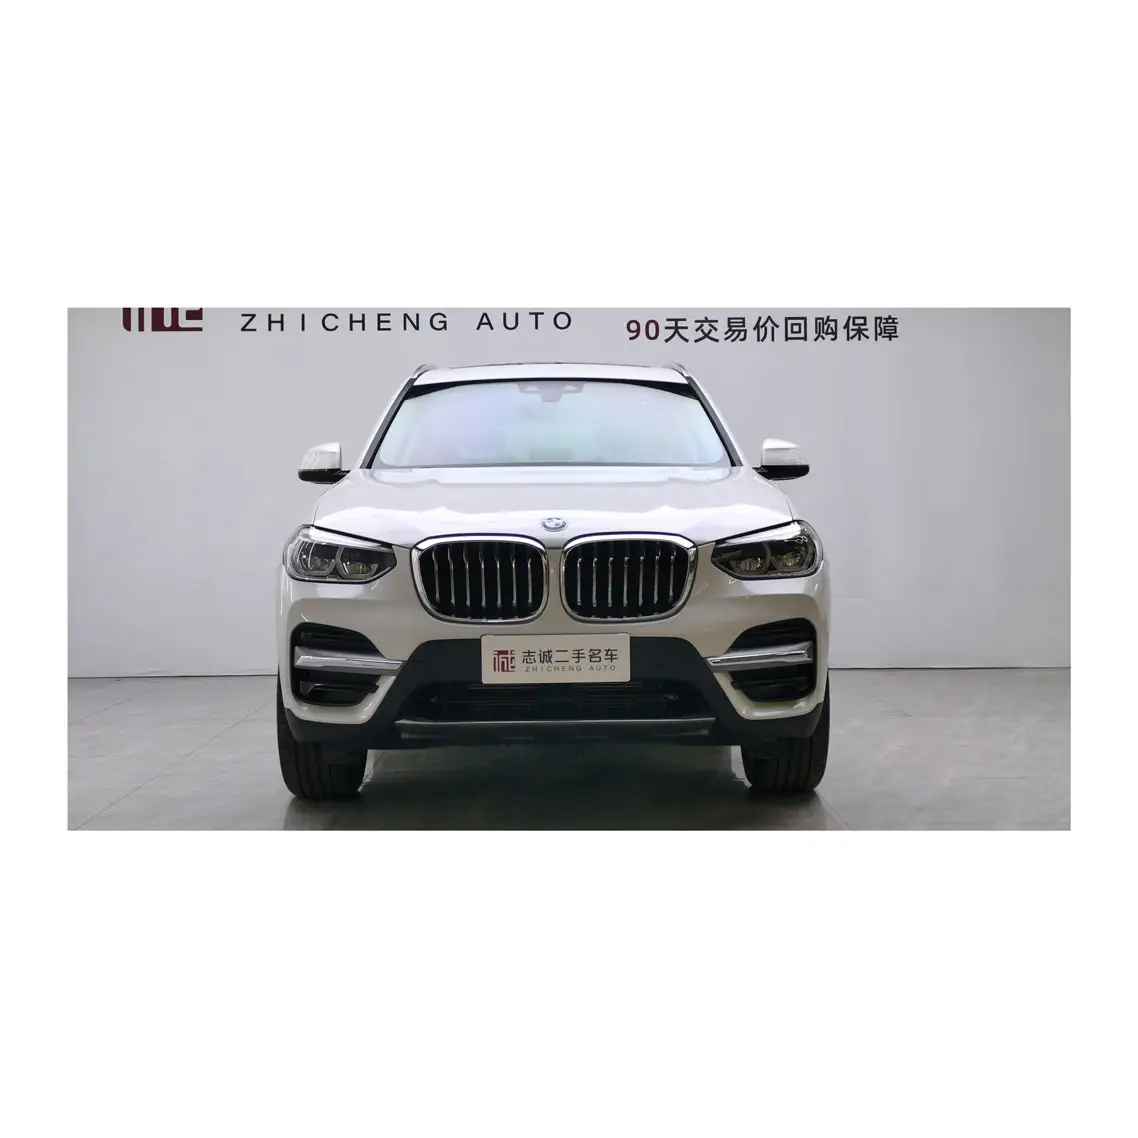 BMW X3 SUV 초침 자동차 고급스러운 Suv Bmw X3 2021 중고차 핫 세일 스포츠 AWD 자동 (보증금)